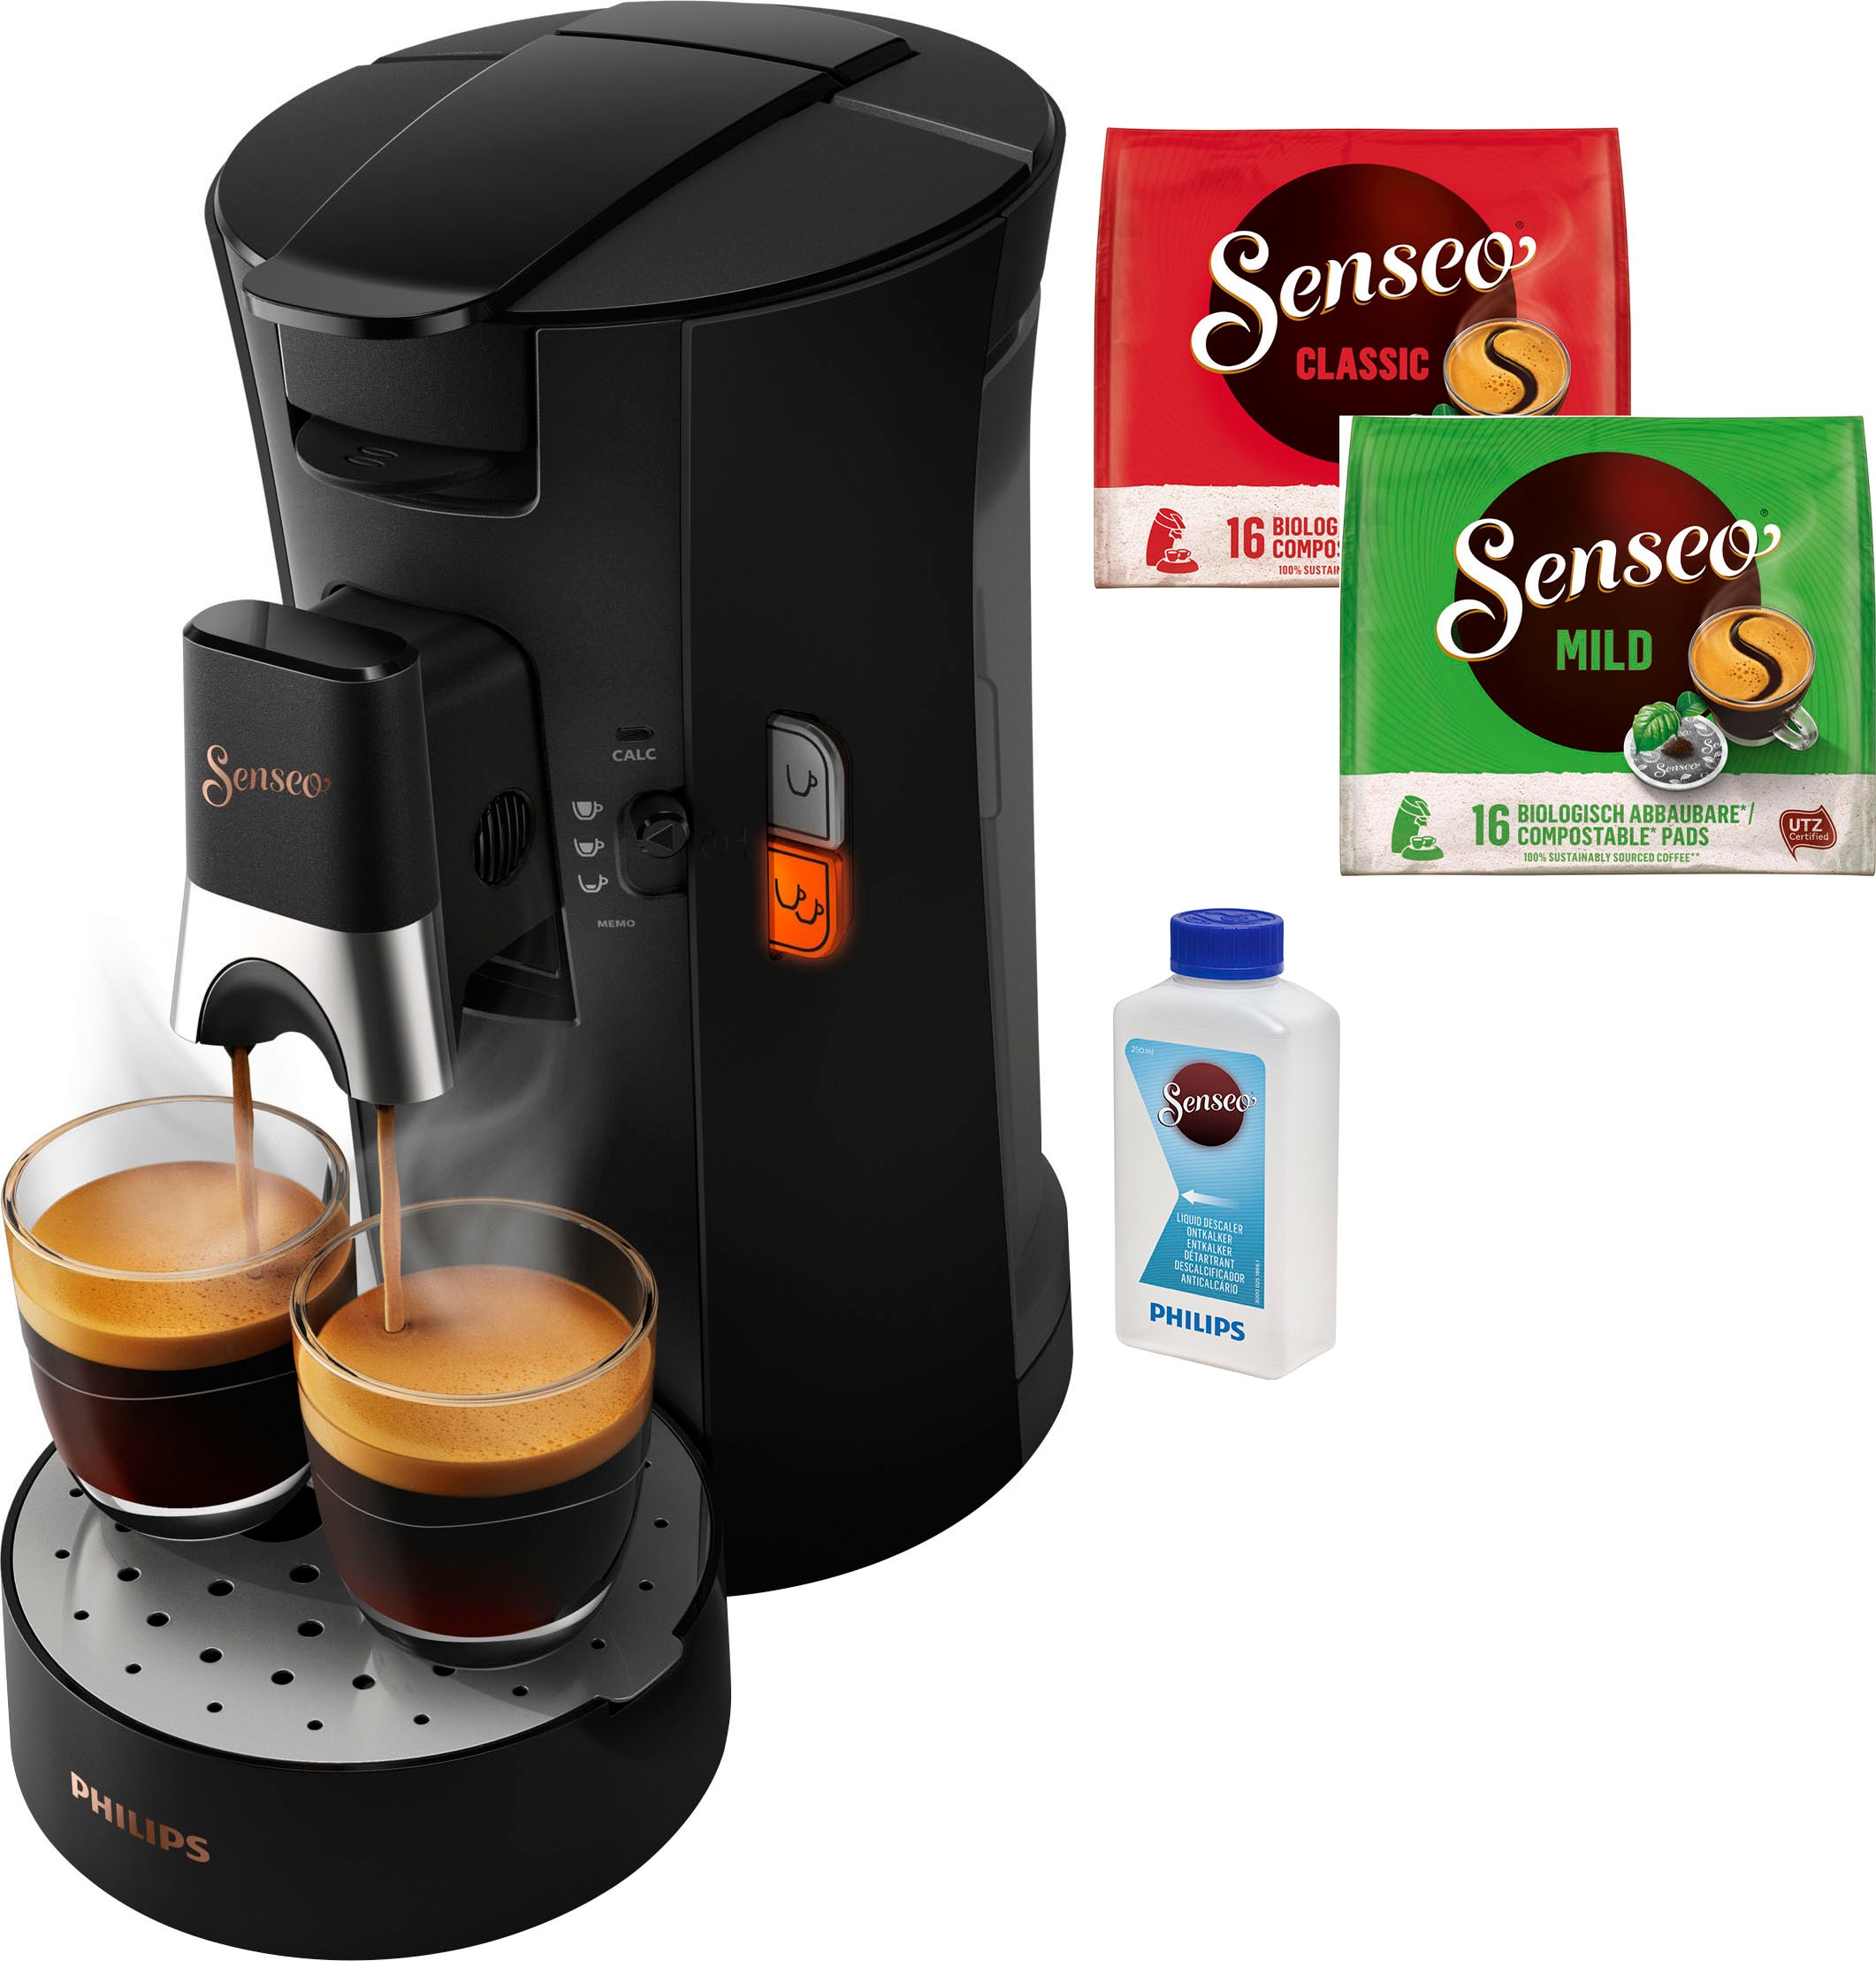 Philips Senseo Kaffeepadmaschine »Select CSA240/60«, aus 21% recyceltem Plastik, mit 3 Kaffeespezialitäten, metal schwarz